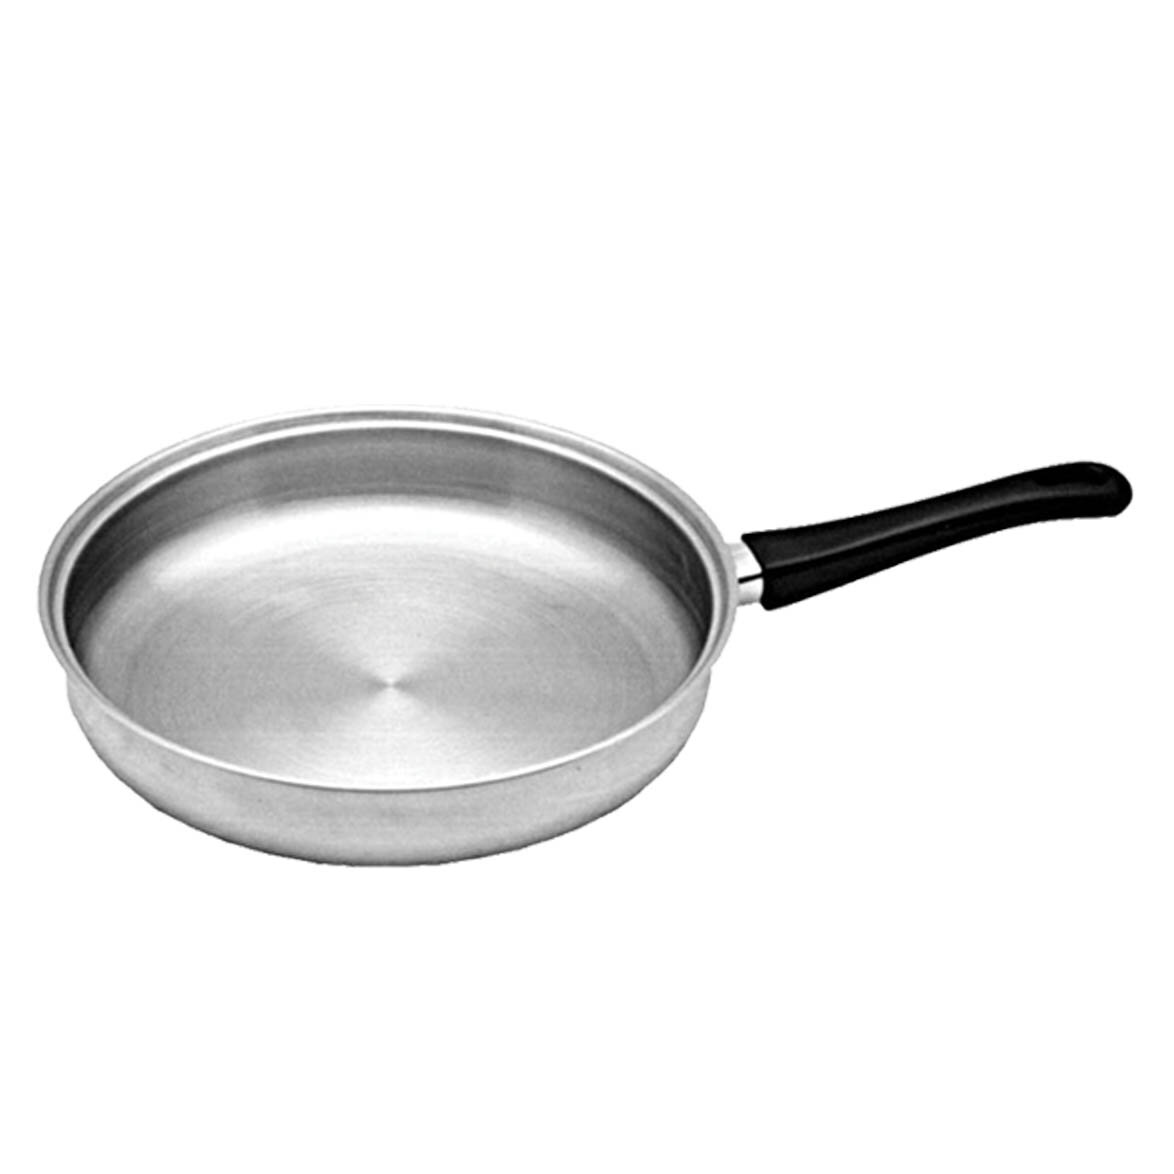  Cyrret Nonstick Deep Frying Pan Skillet with Lid, 10